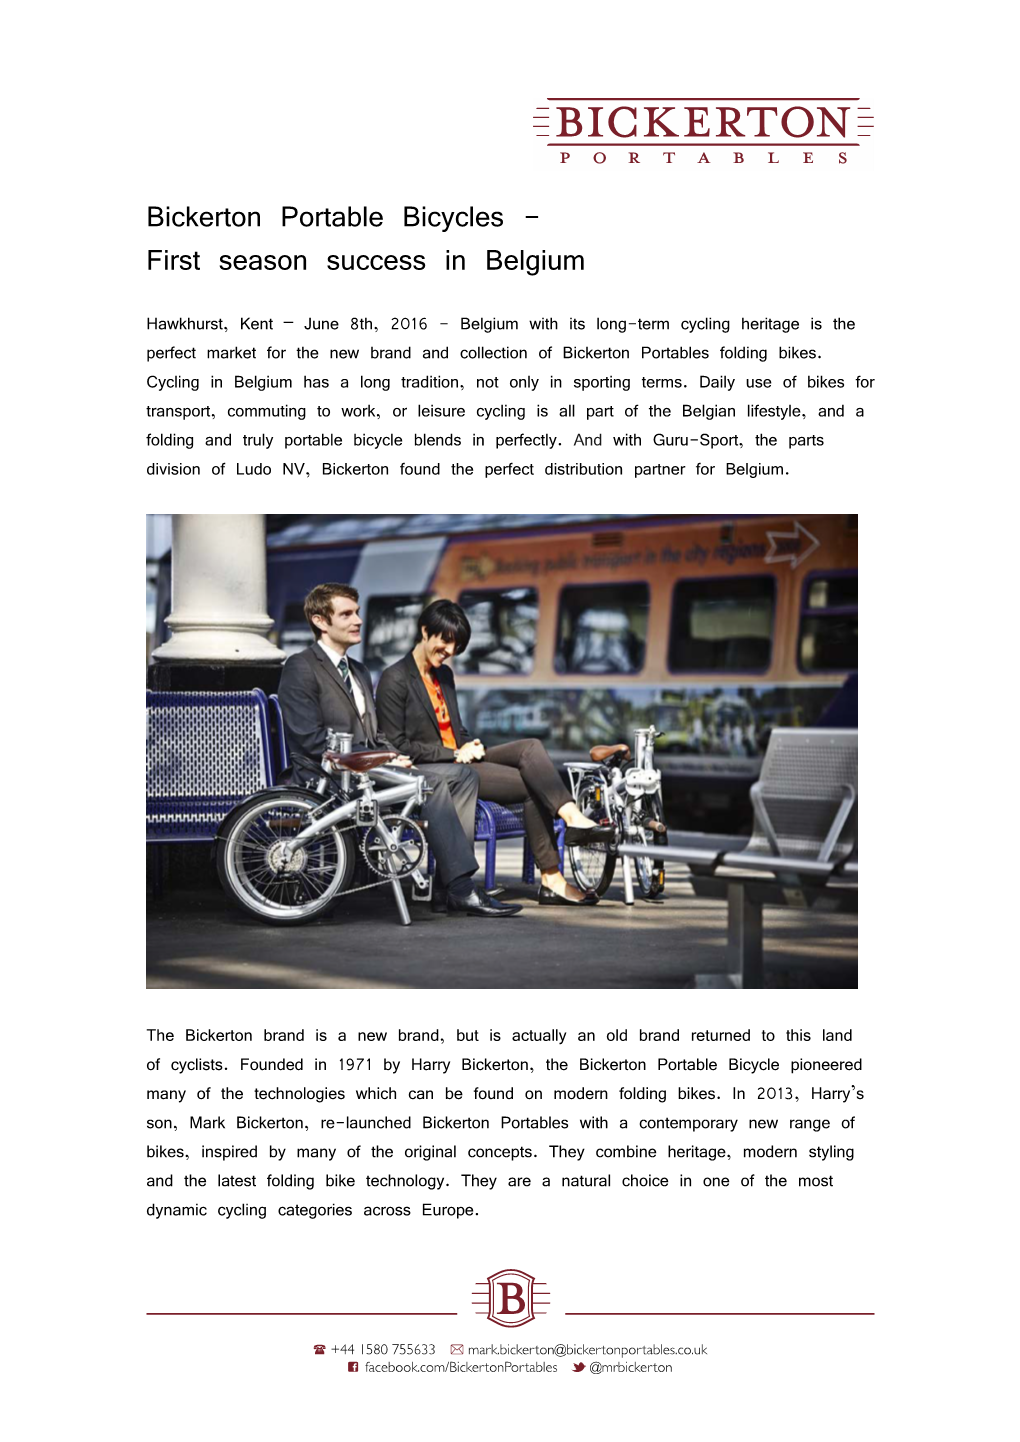 Bickerton Portable Bicycles - First Season Success in Belgium